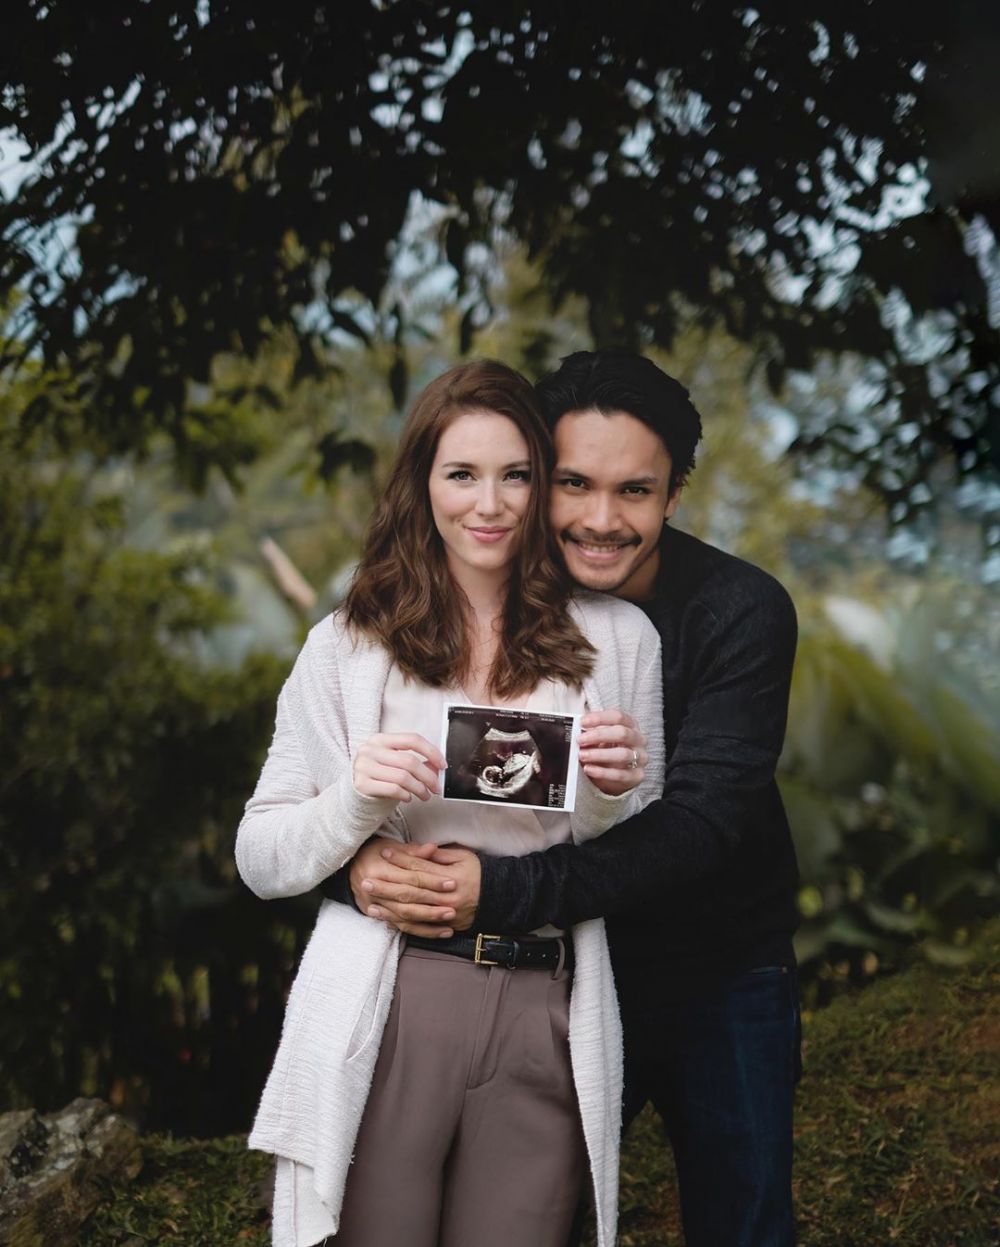 Umumkan hamil, ini 10 potret mesra Randy Pangalila & istri bule